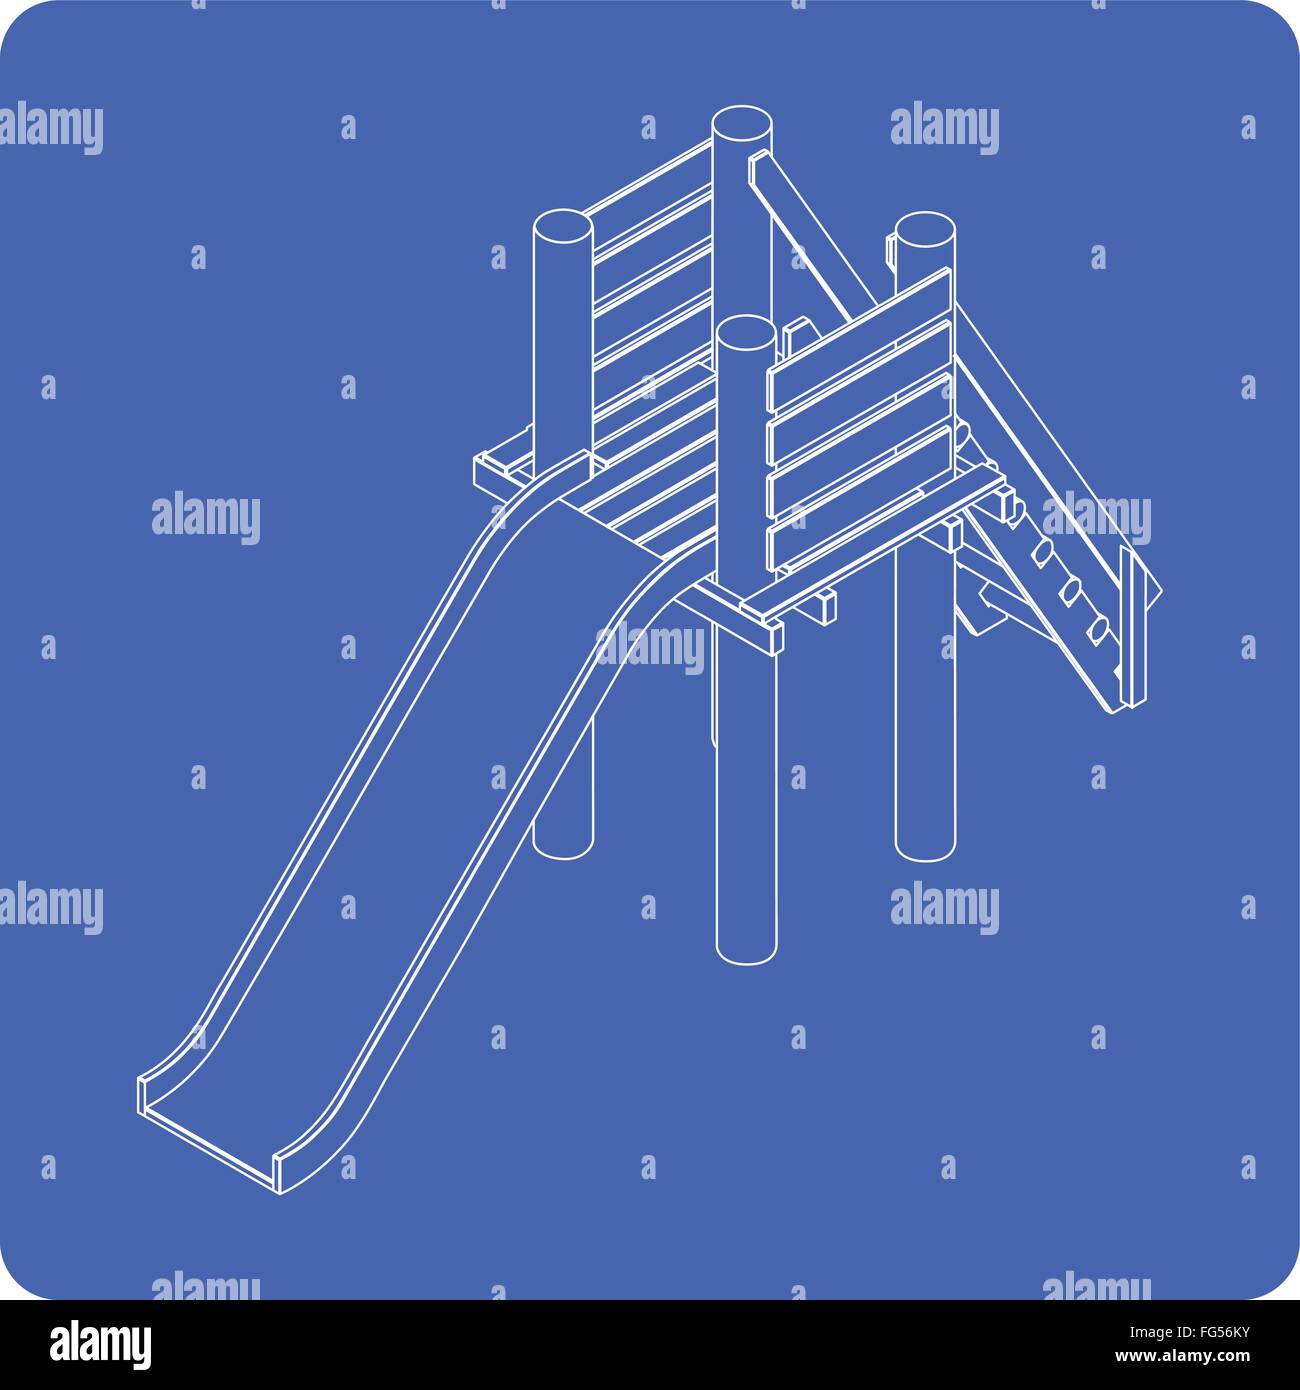 linear playfround slide illustration Stock Vector